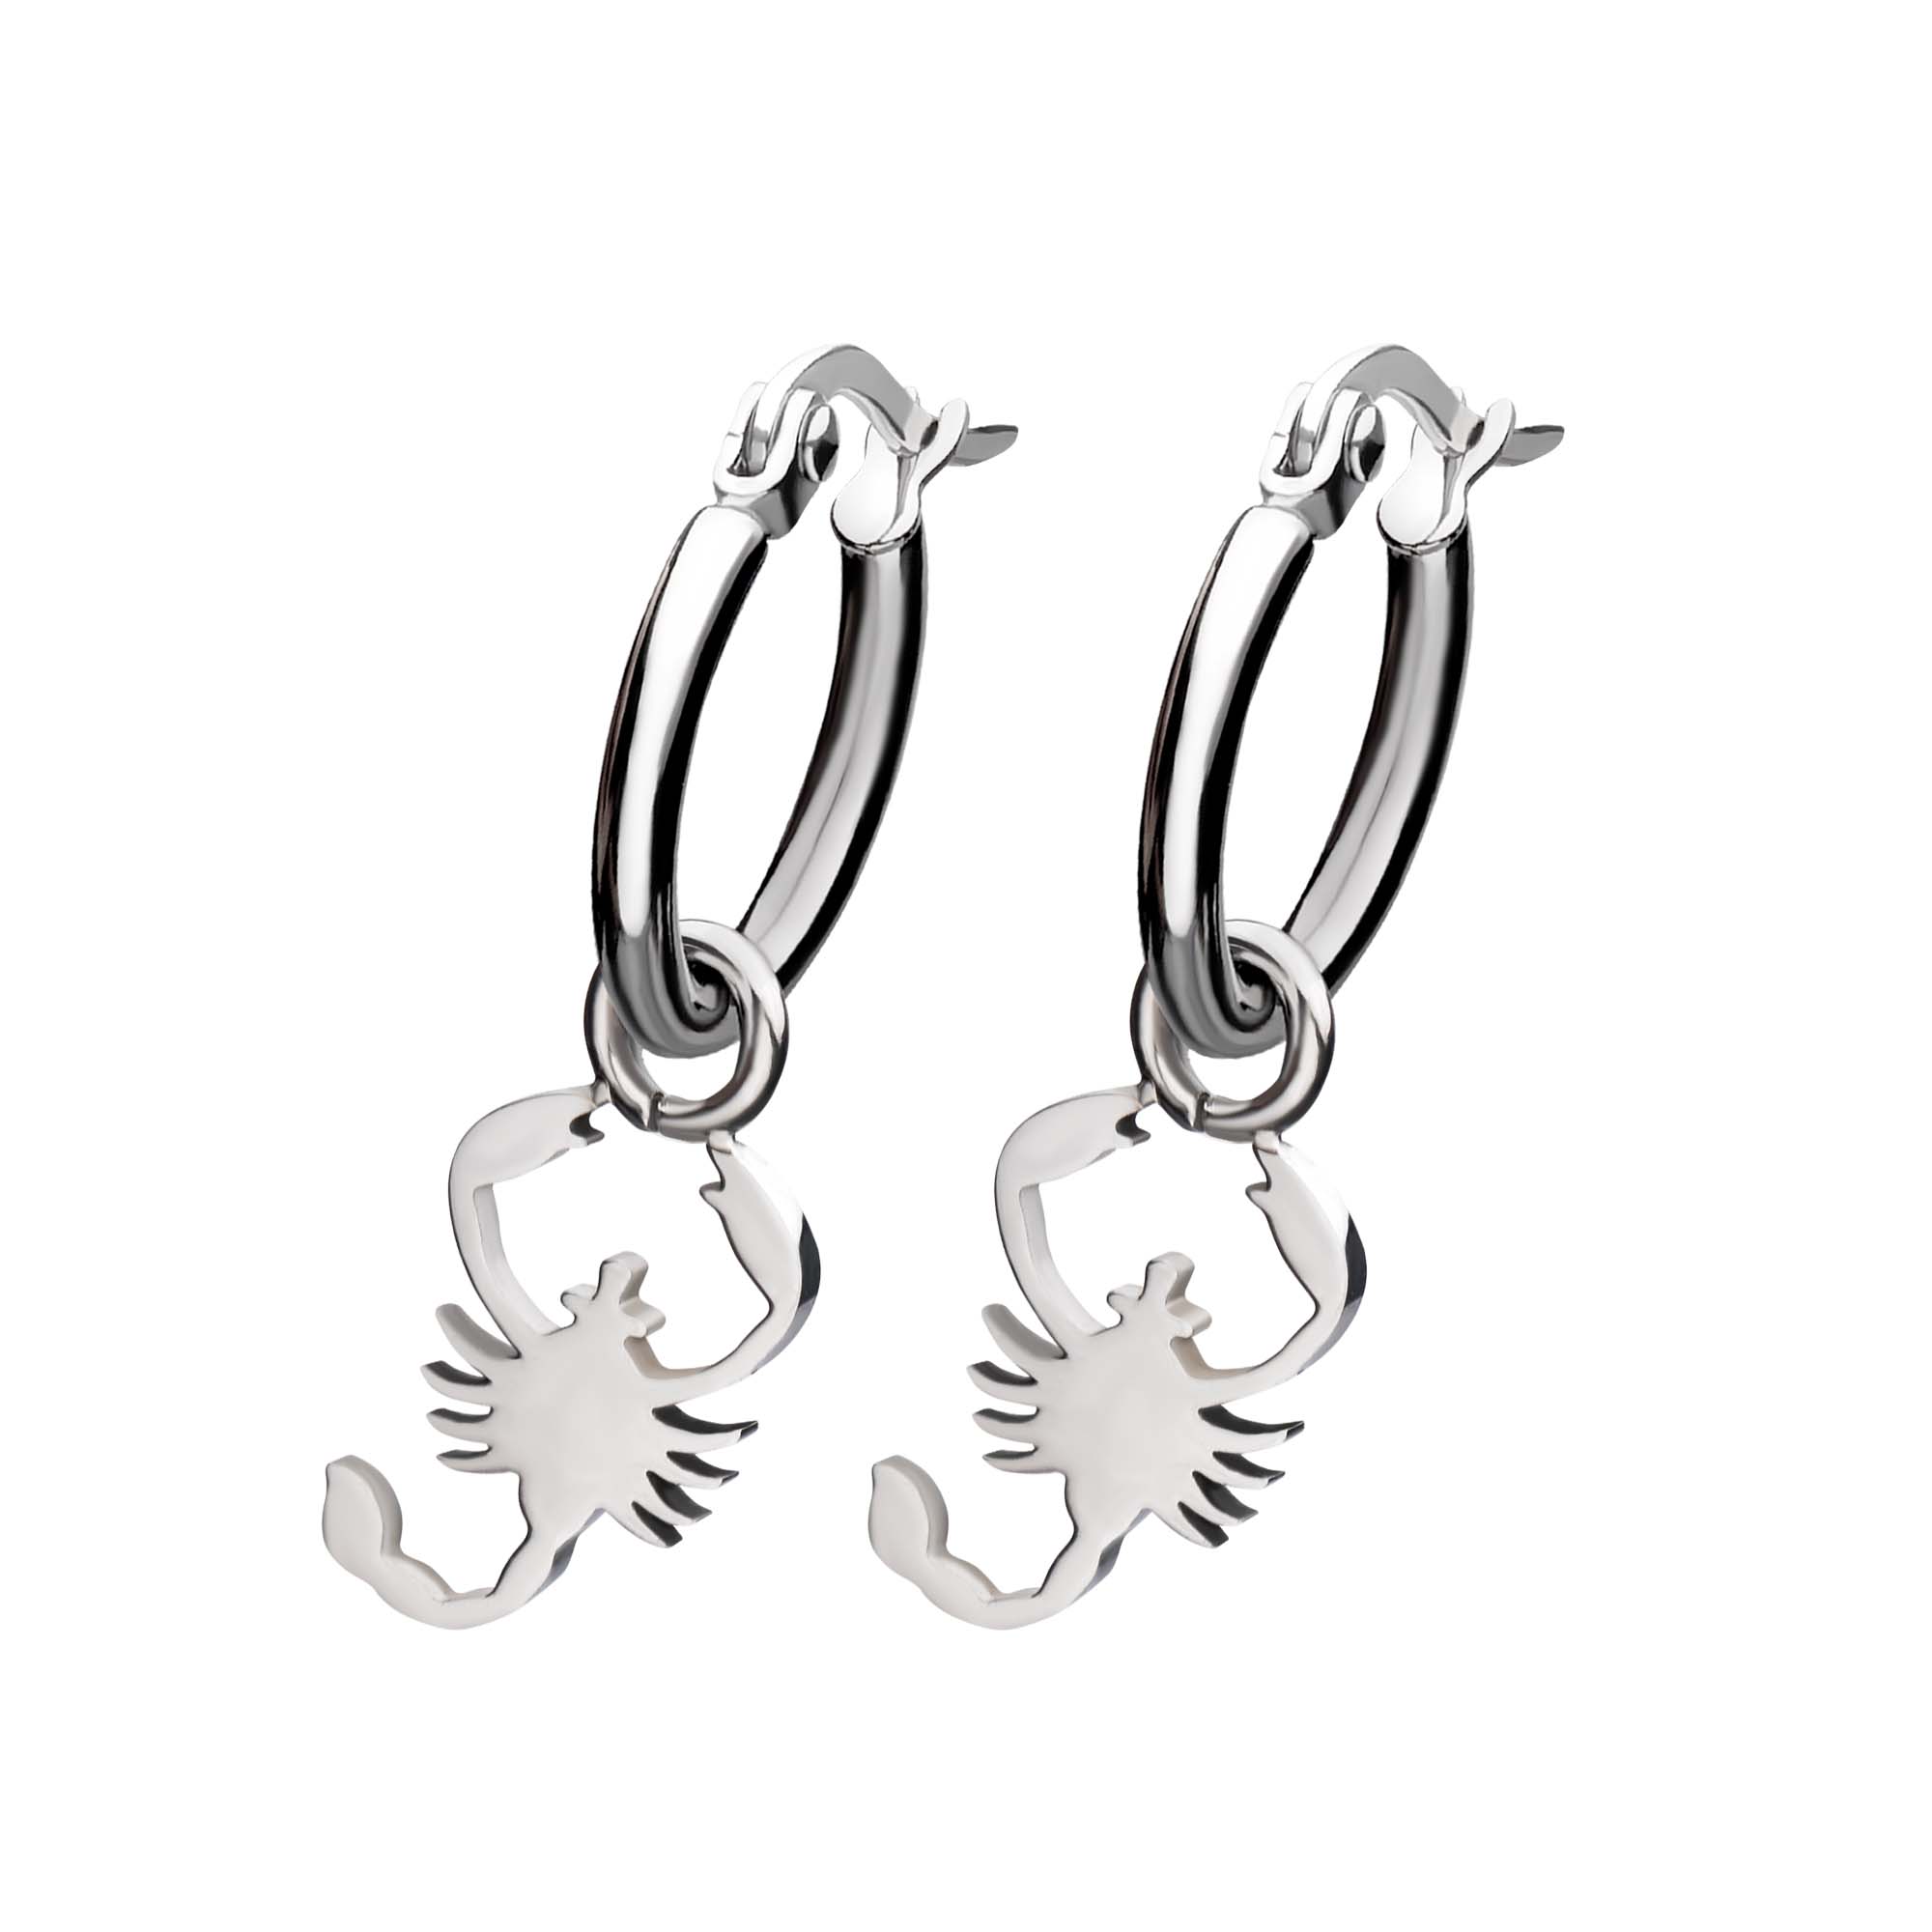 Stainless Steel Hoop Earrings with Scorpio Charm Image 2 P.K. Bennett Jewelers Mundelein, IL